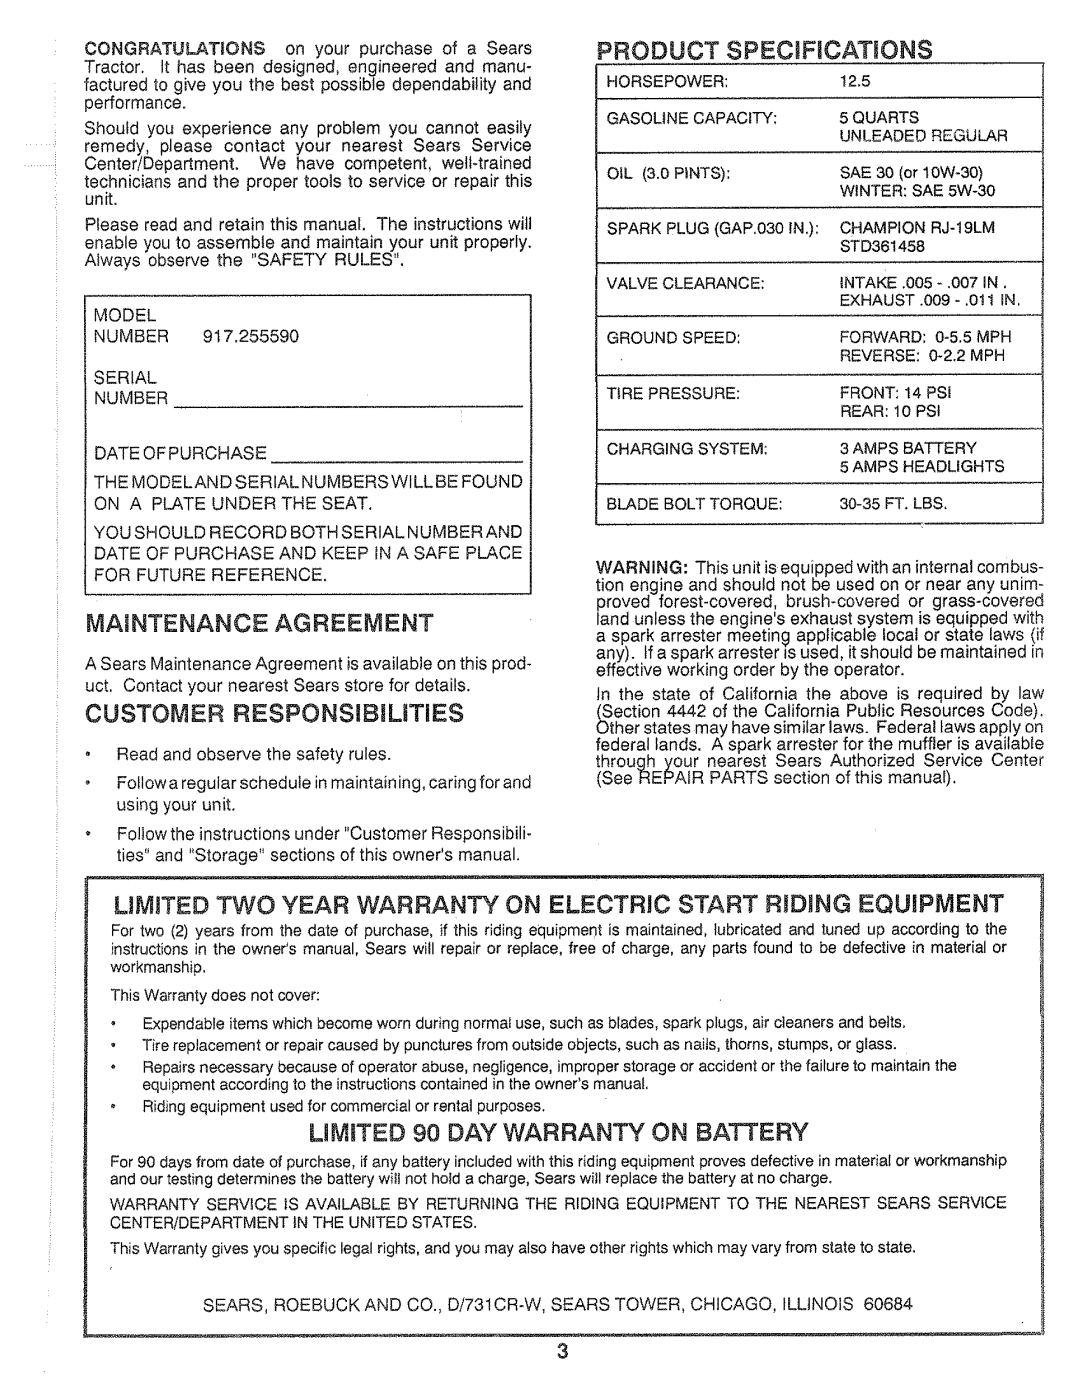 Sears 917.25559 manual Mawntenance Agreement, CUSTOMER RESPONSIBALtTIES, PRODUCT SPEC FmCATIONS 